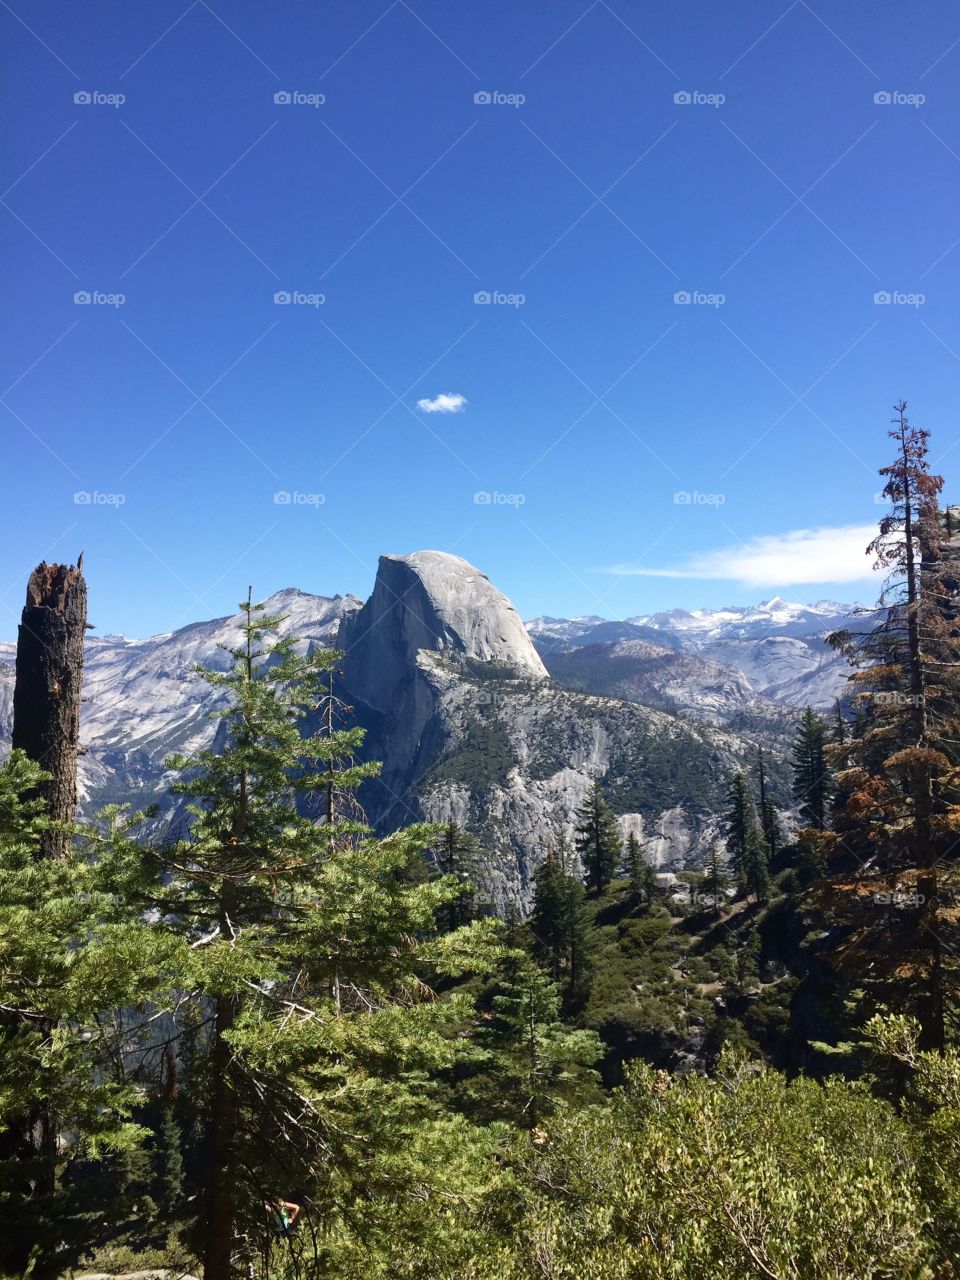 Half dome at Yosemite